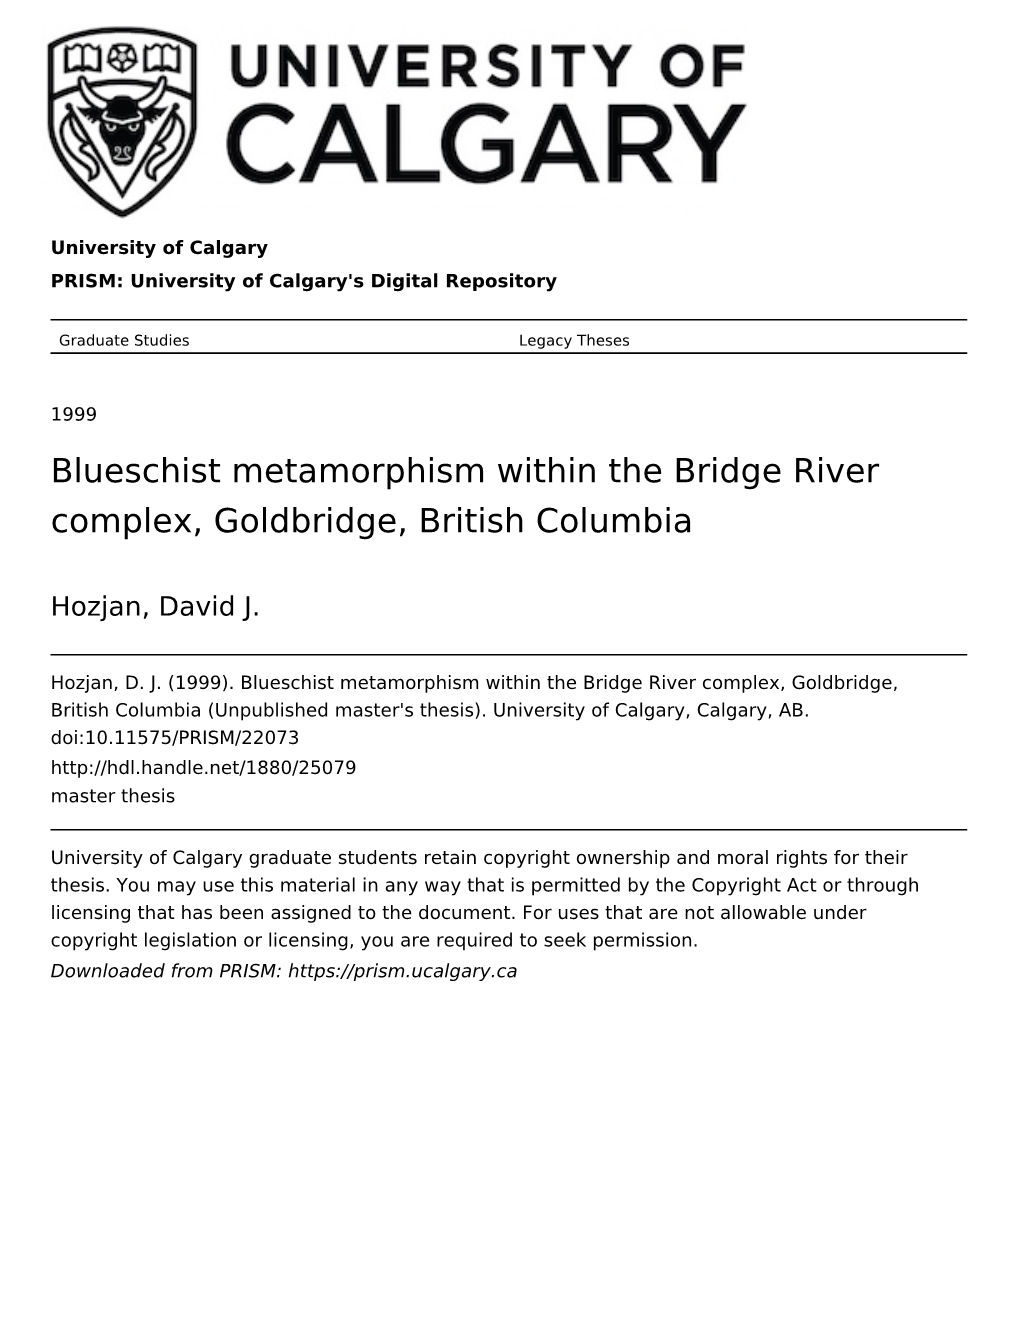 Blueschist Metamorphism Within the Bridge River Complex, Goldbridge, British Columbia